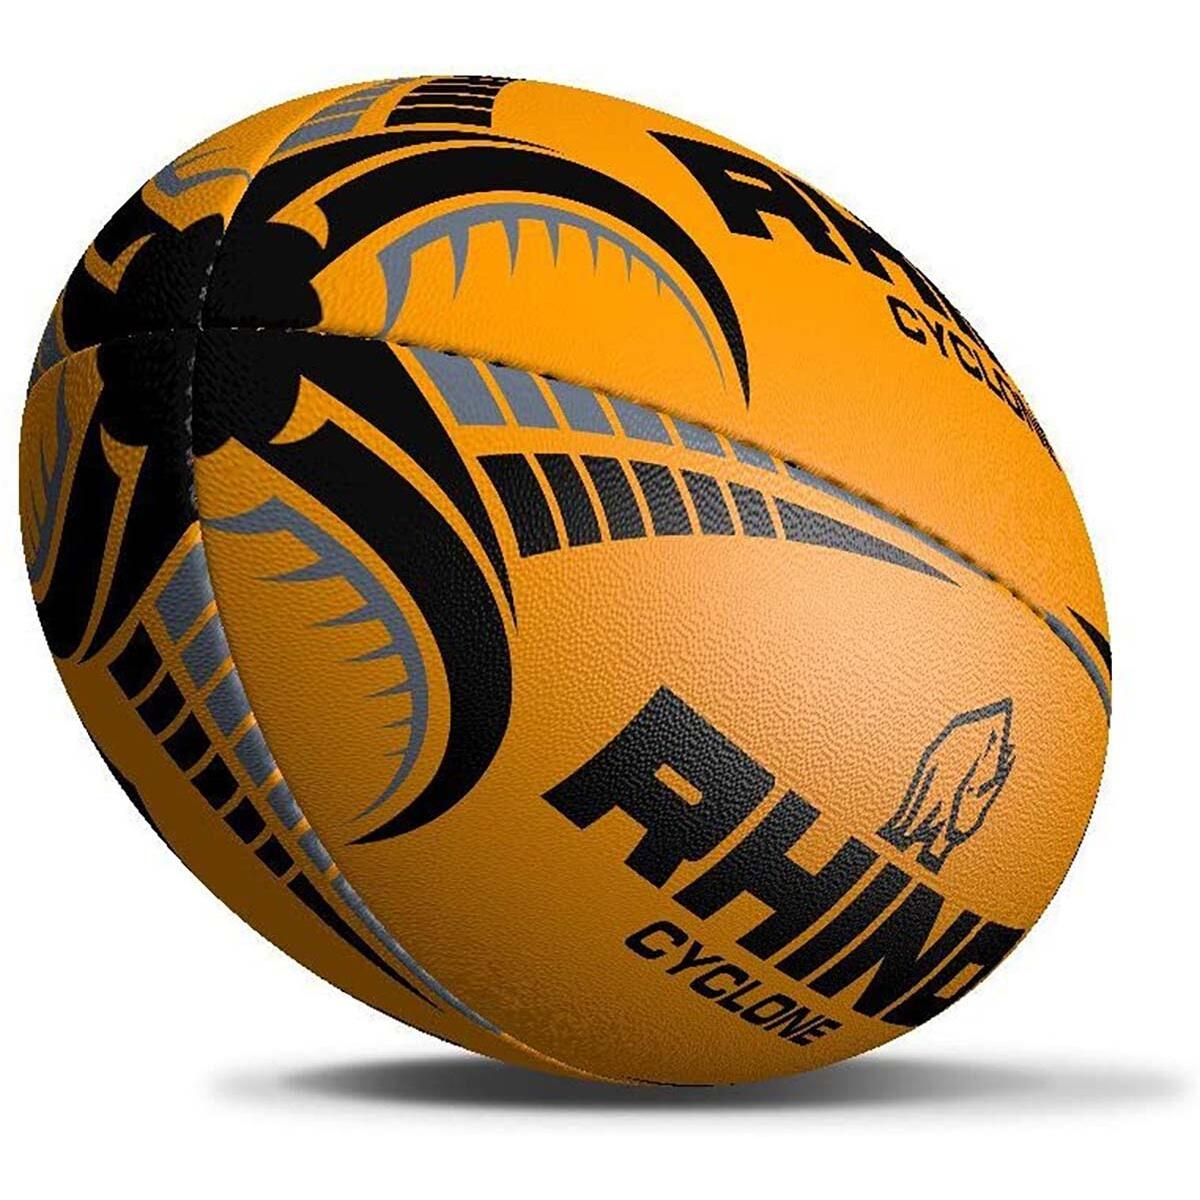 Cyclone Rugby Ball (Fluorescent Orange) 3/4